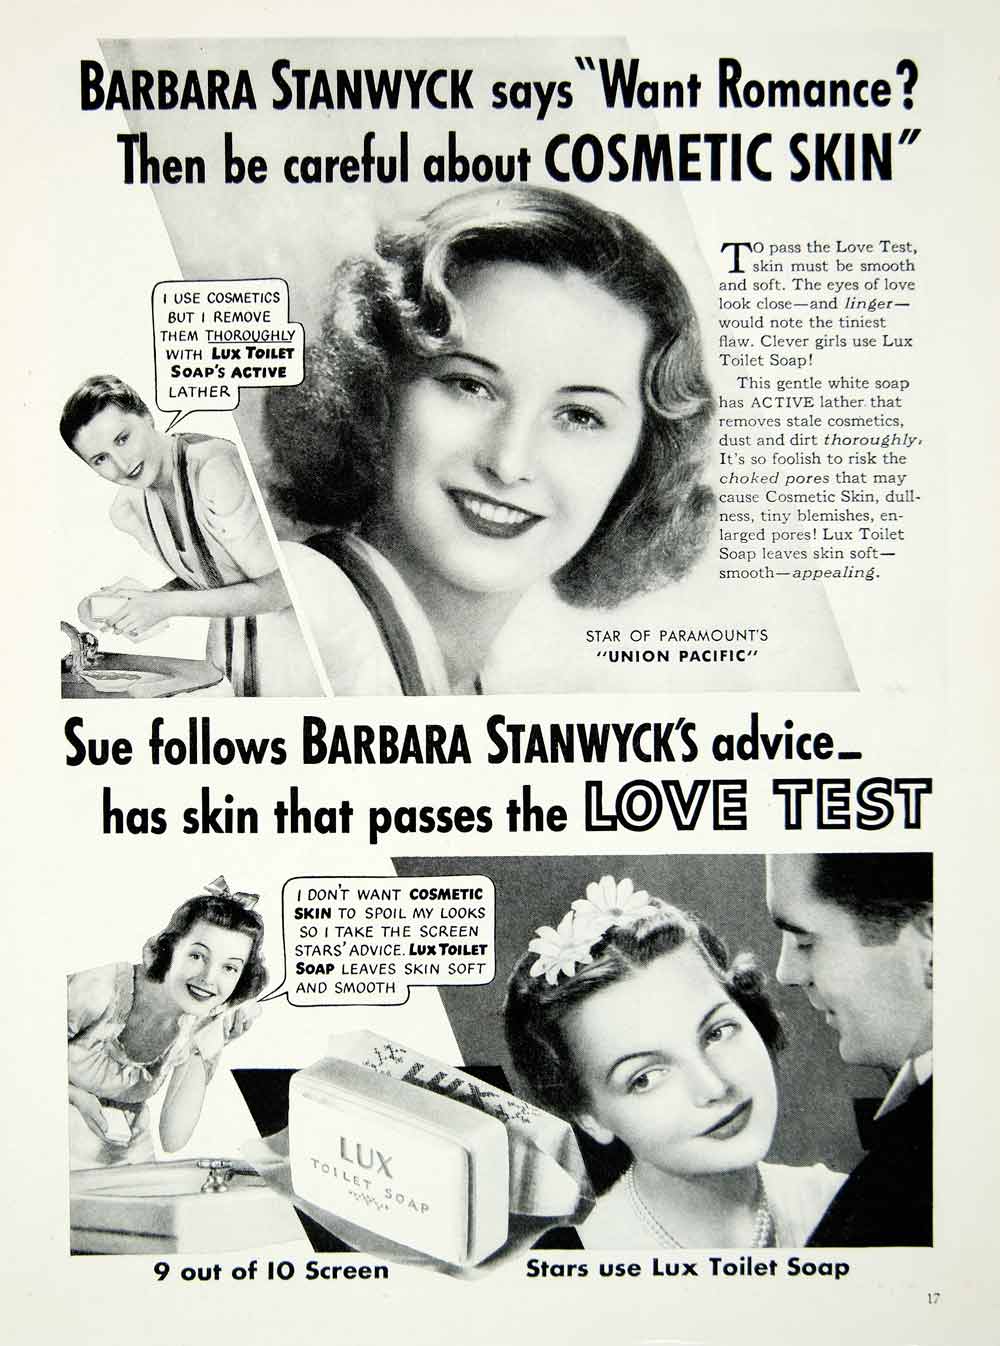 1918 Ad Resinol Soap Baltimore Maryland Bathroom Hygiene Sink Skin YRC –  Period Paper Historic Art LLC